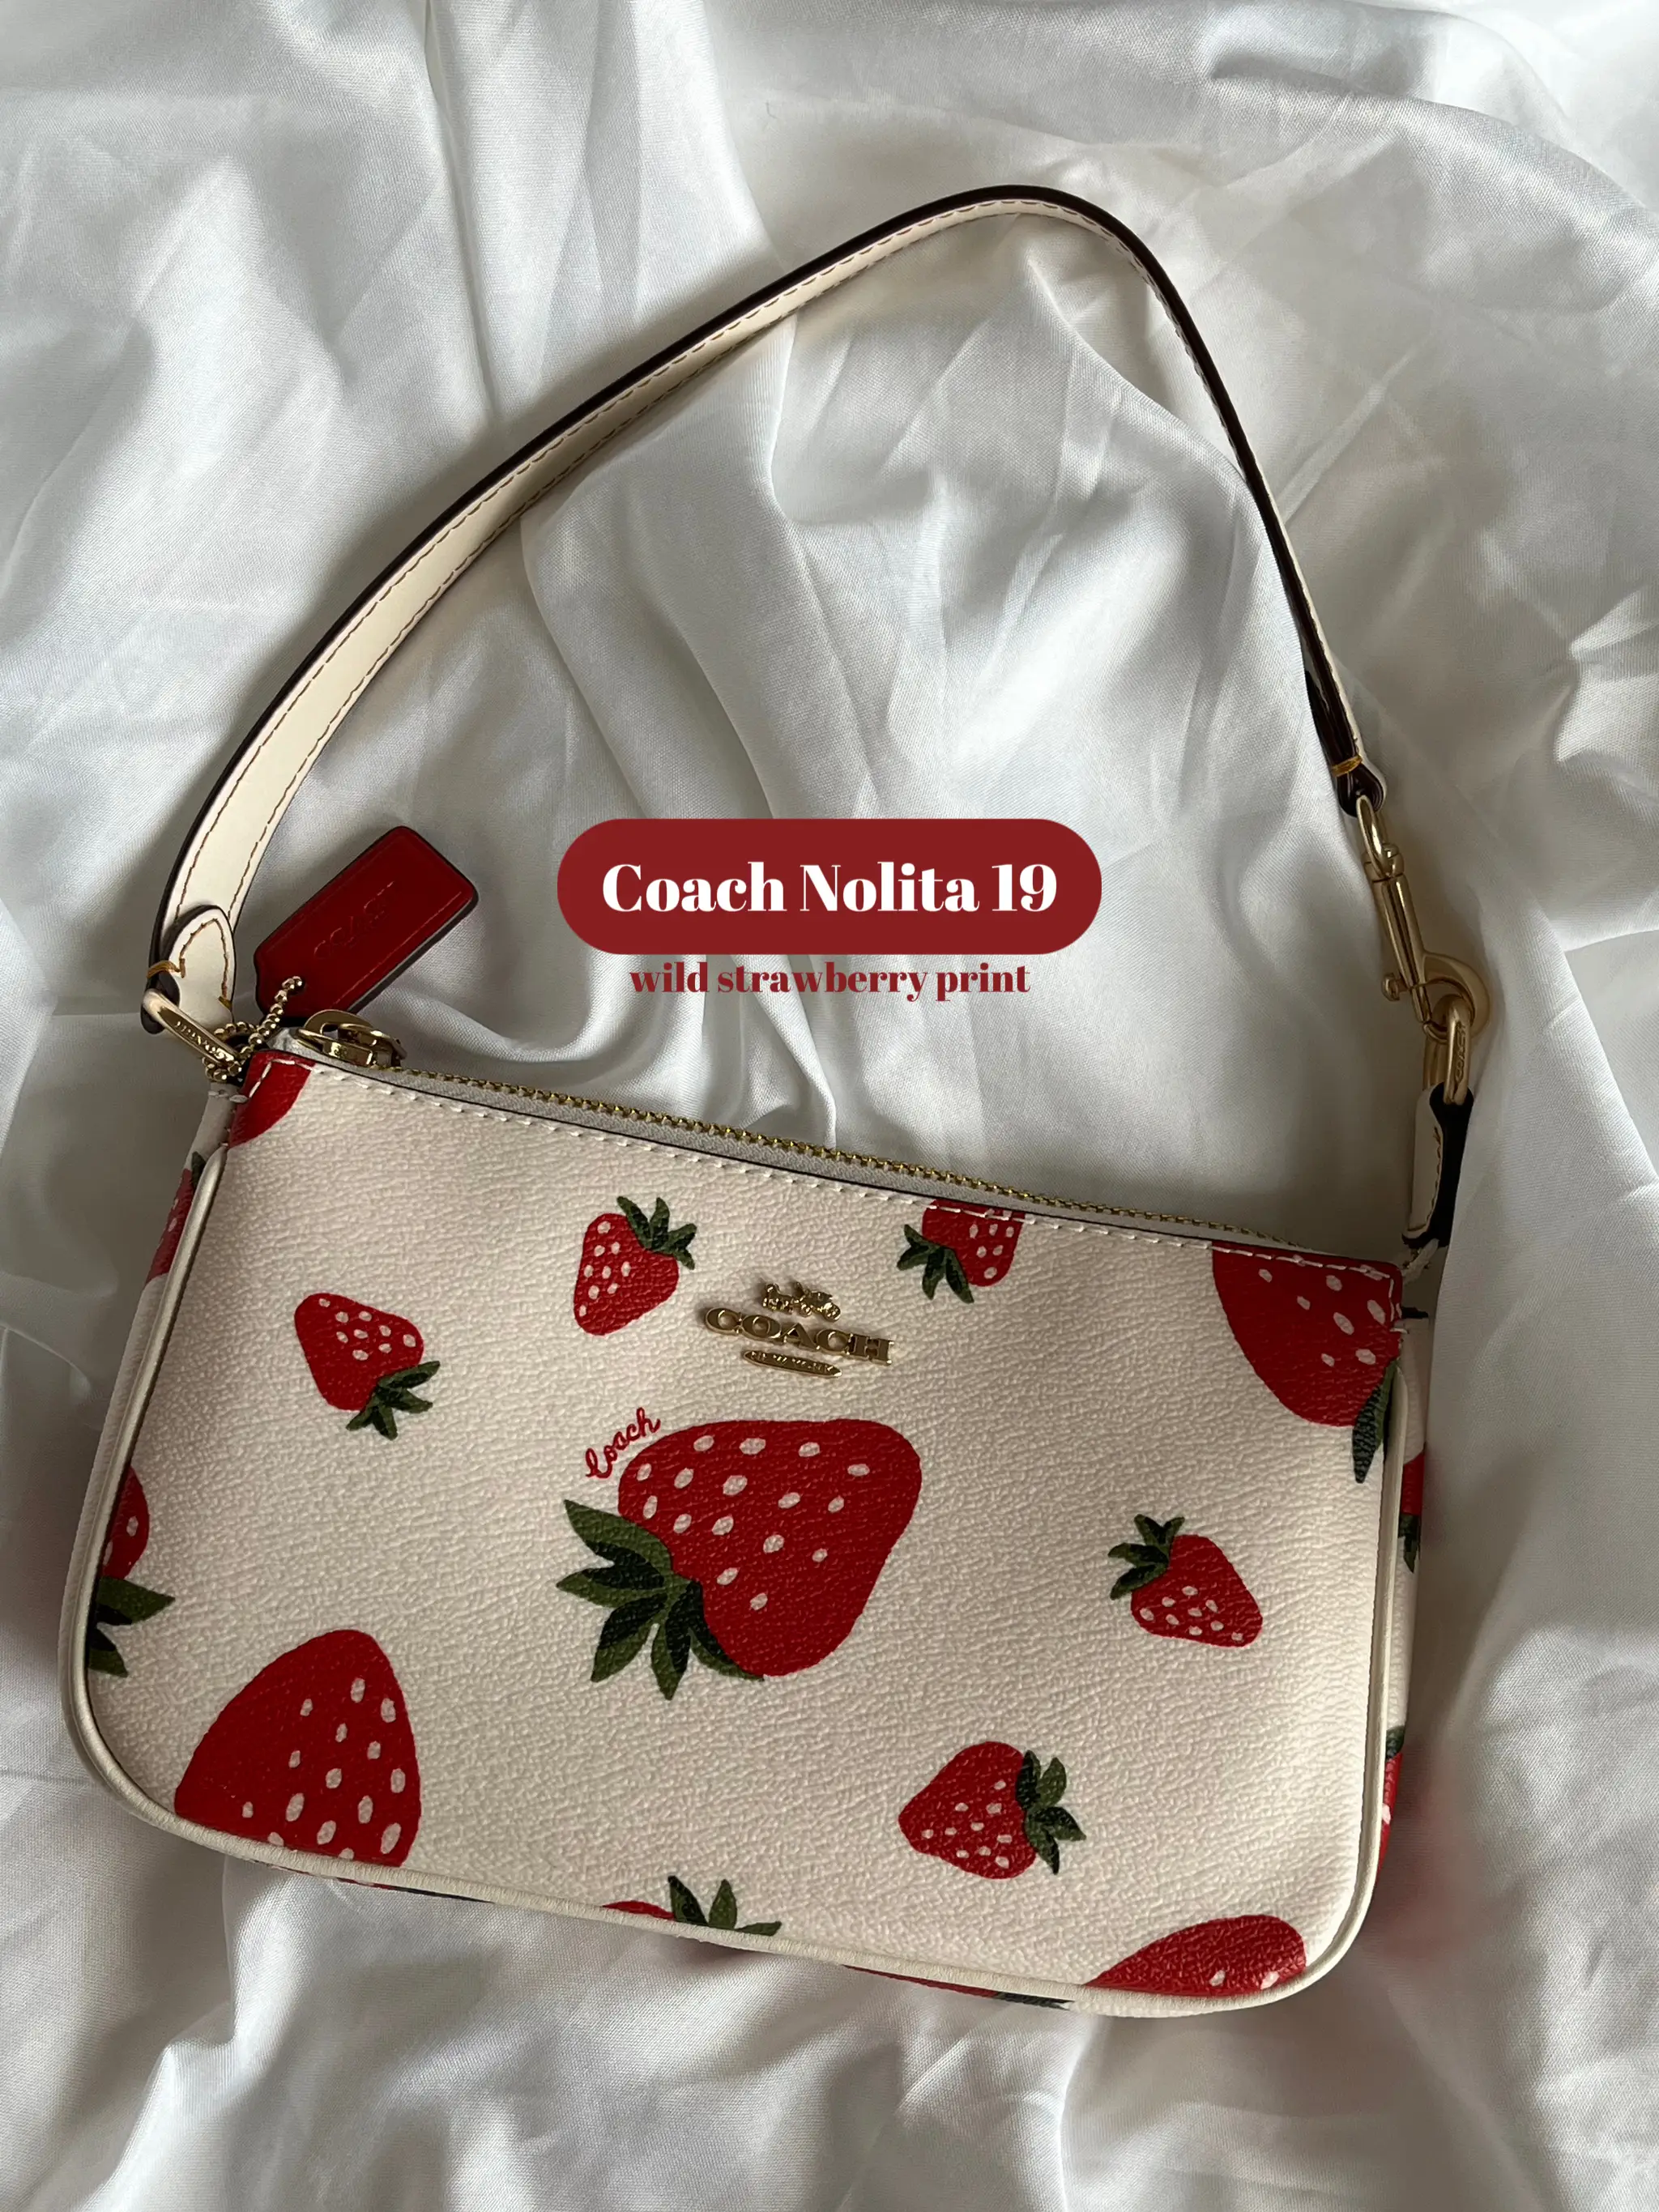 Coach Nolita 19 Bag Purse